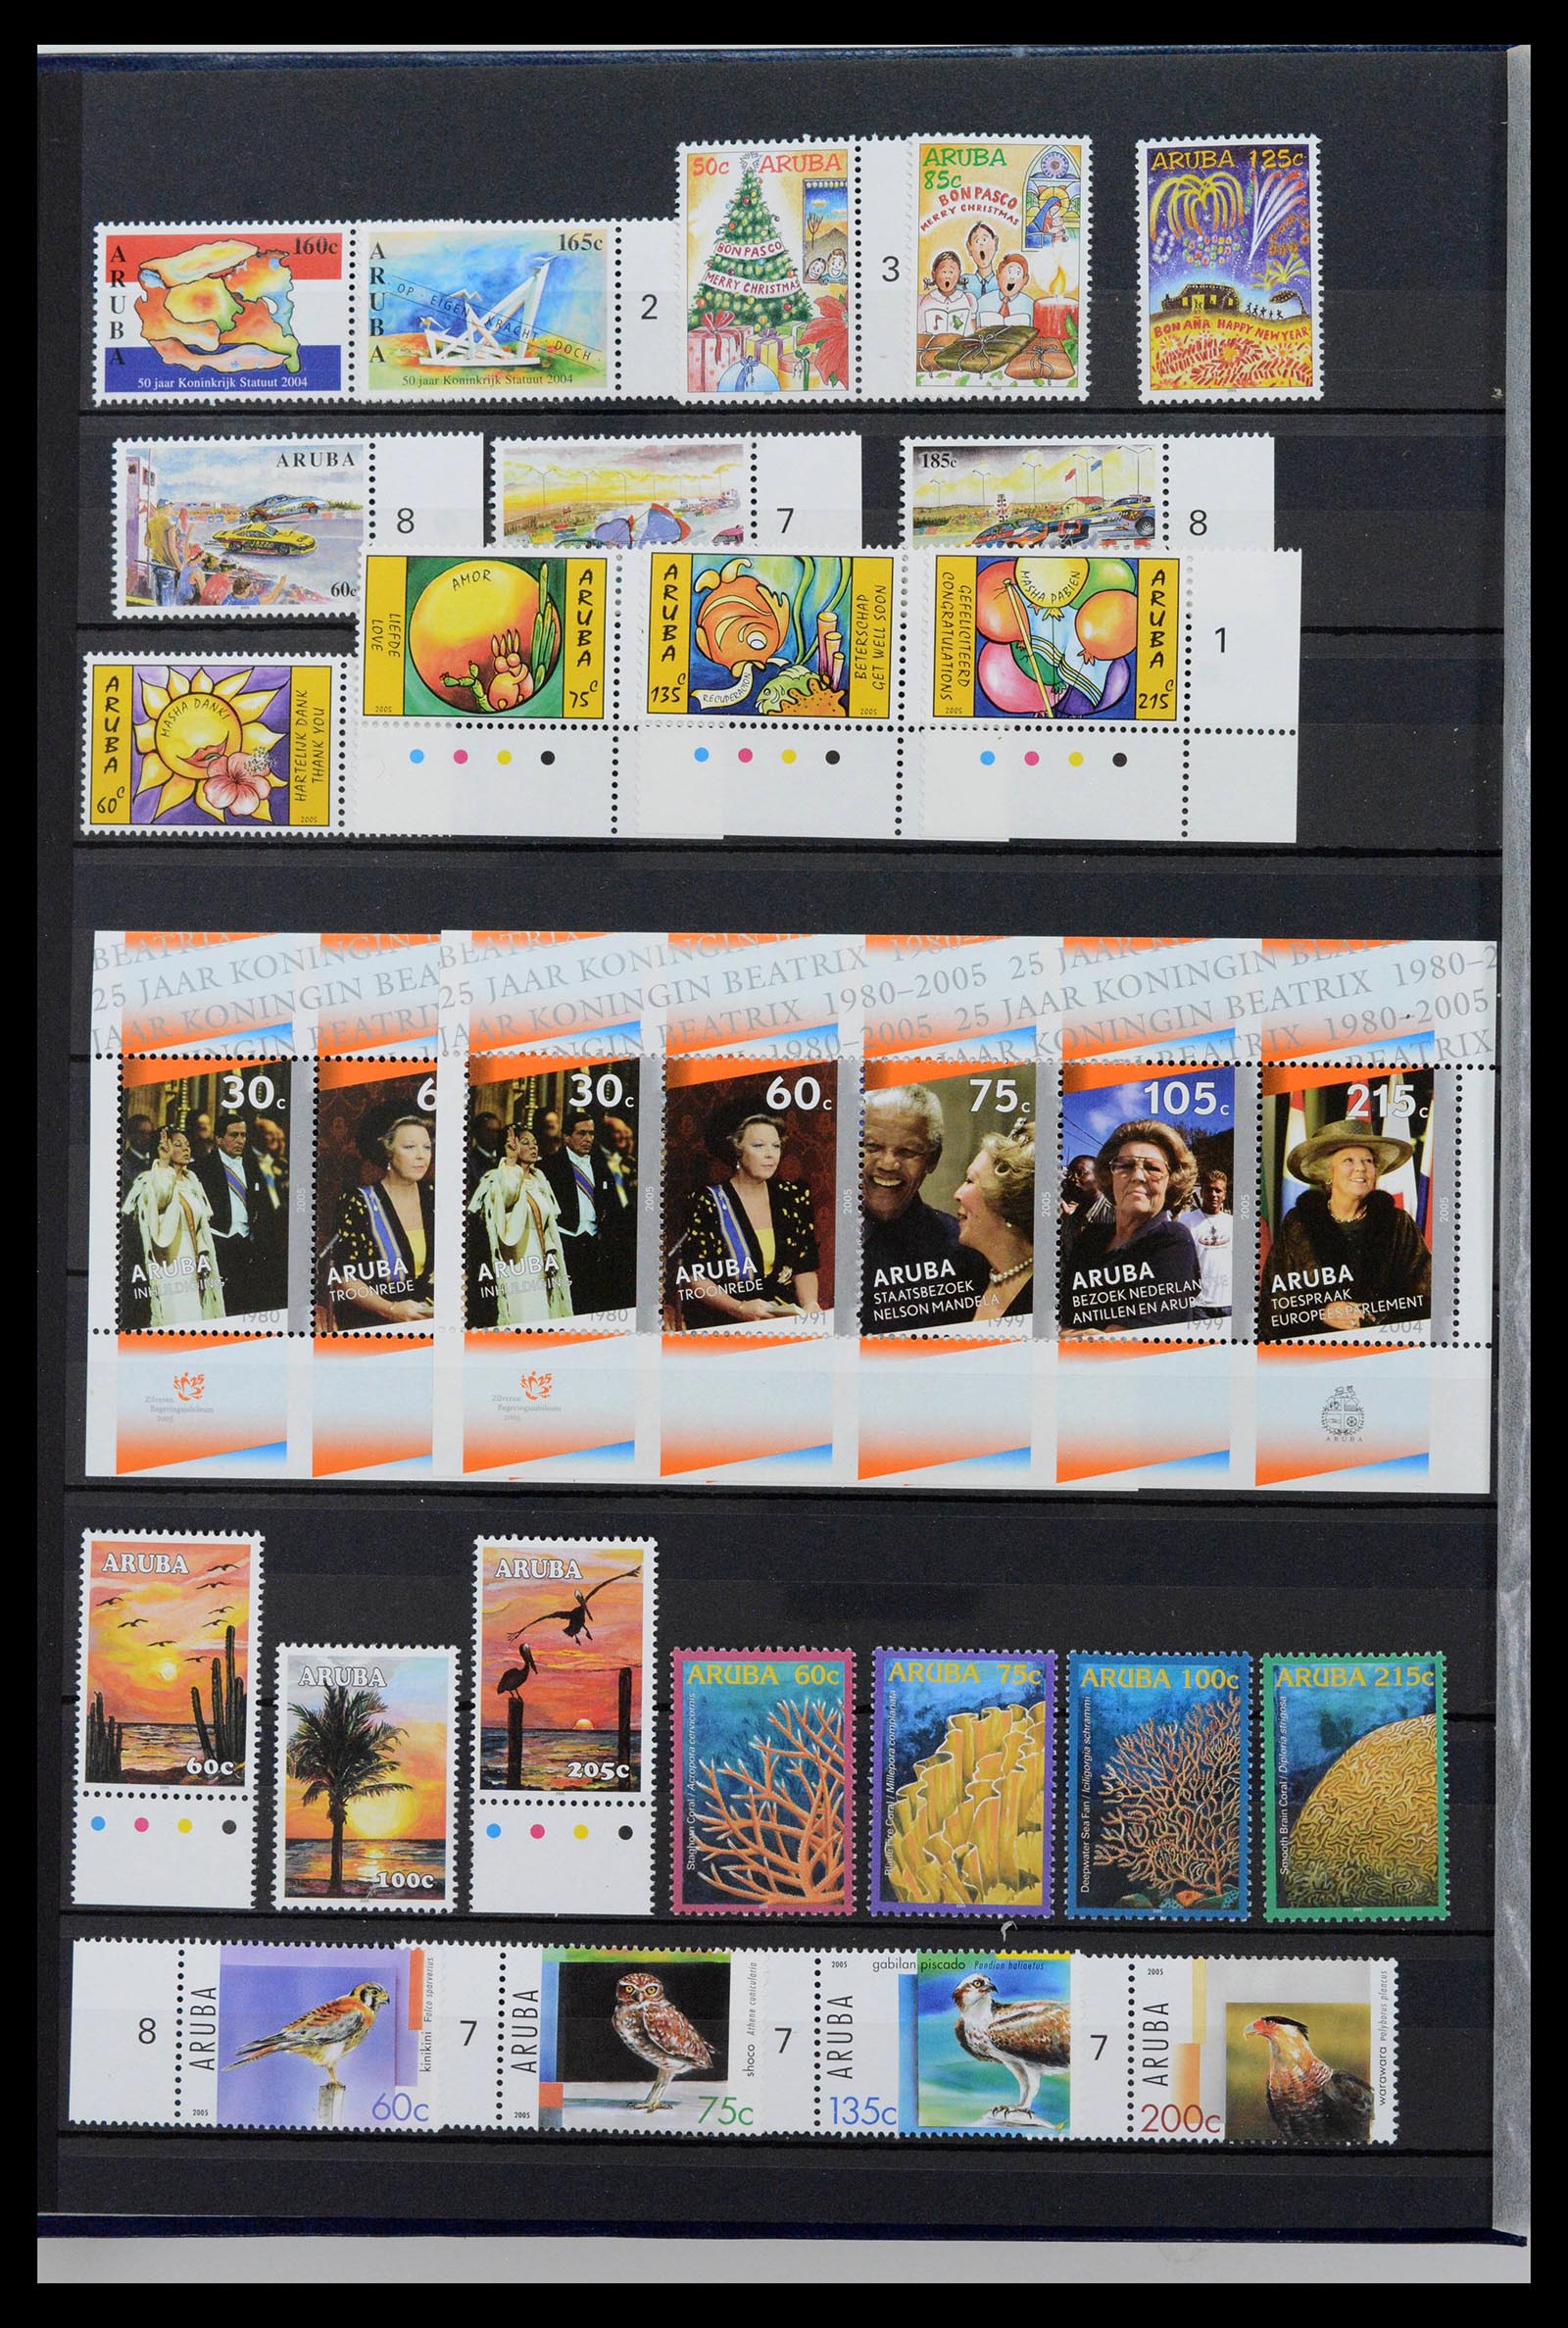 39027 0012 - Stamp collection 39027 Curaçao/Antilles/Aruba 1873-2009.